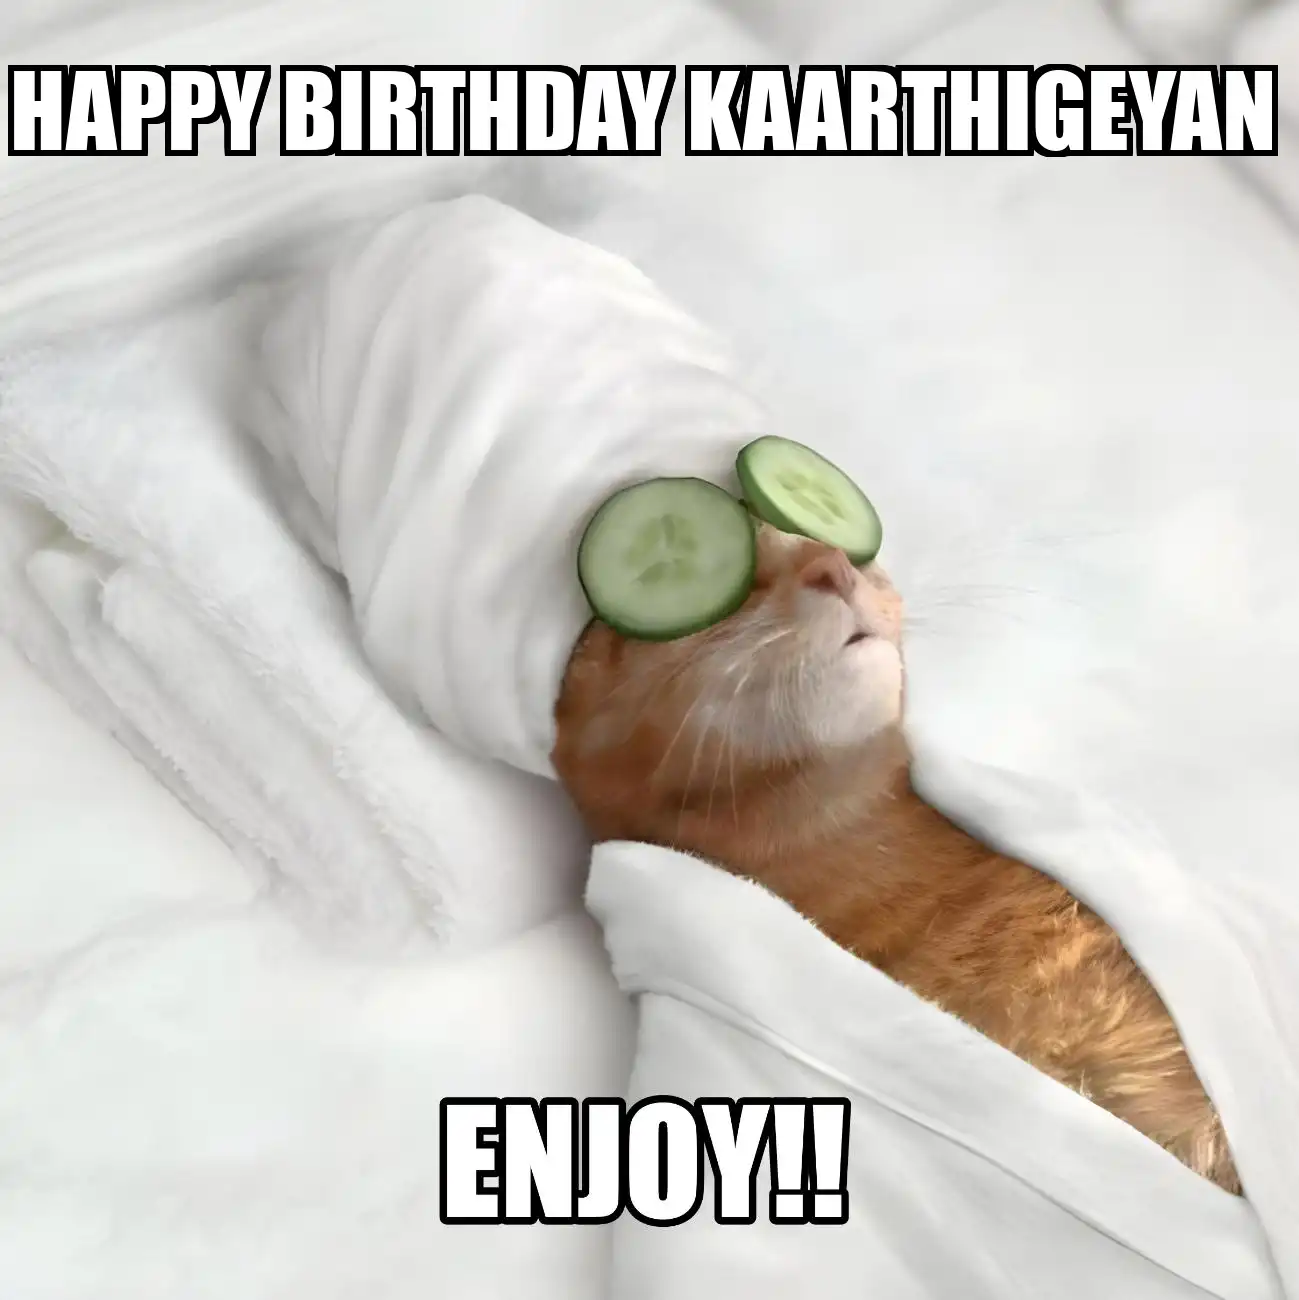 Happy Birthday Kaarthigeyan Enjoy Cat Meme